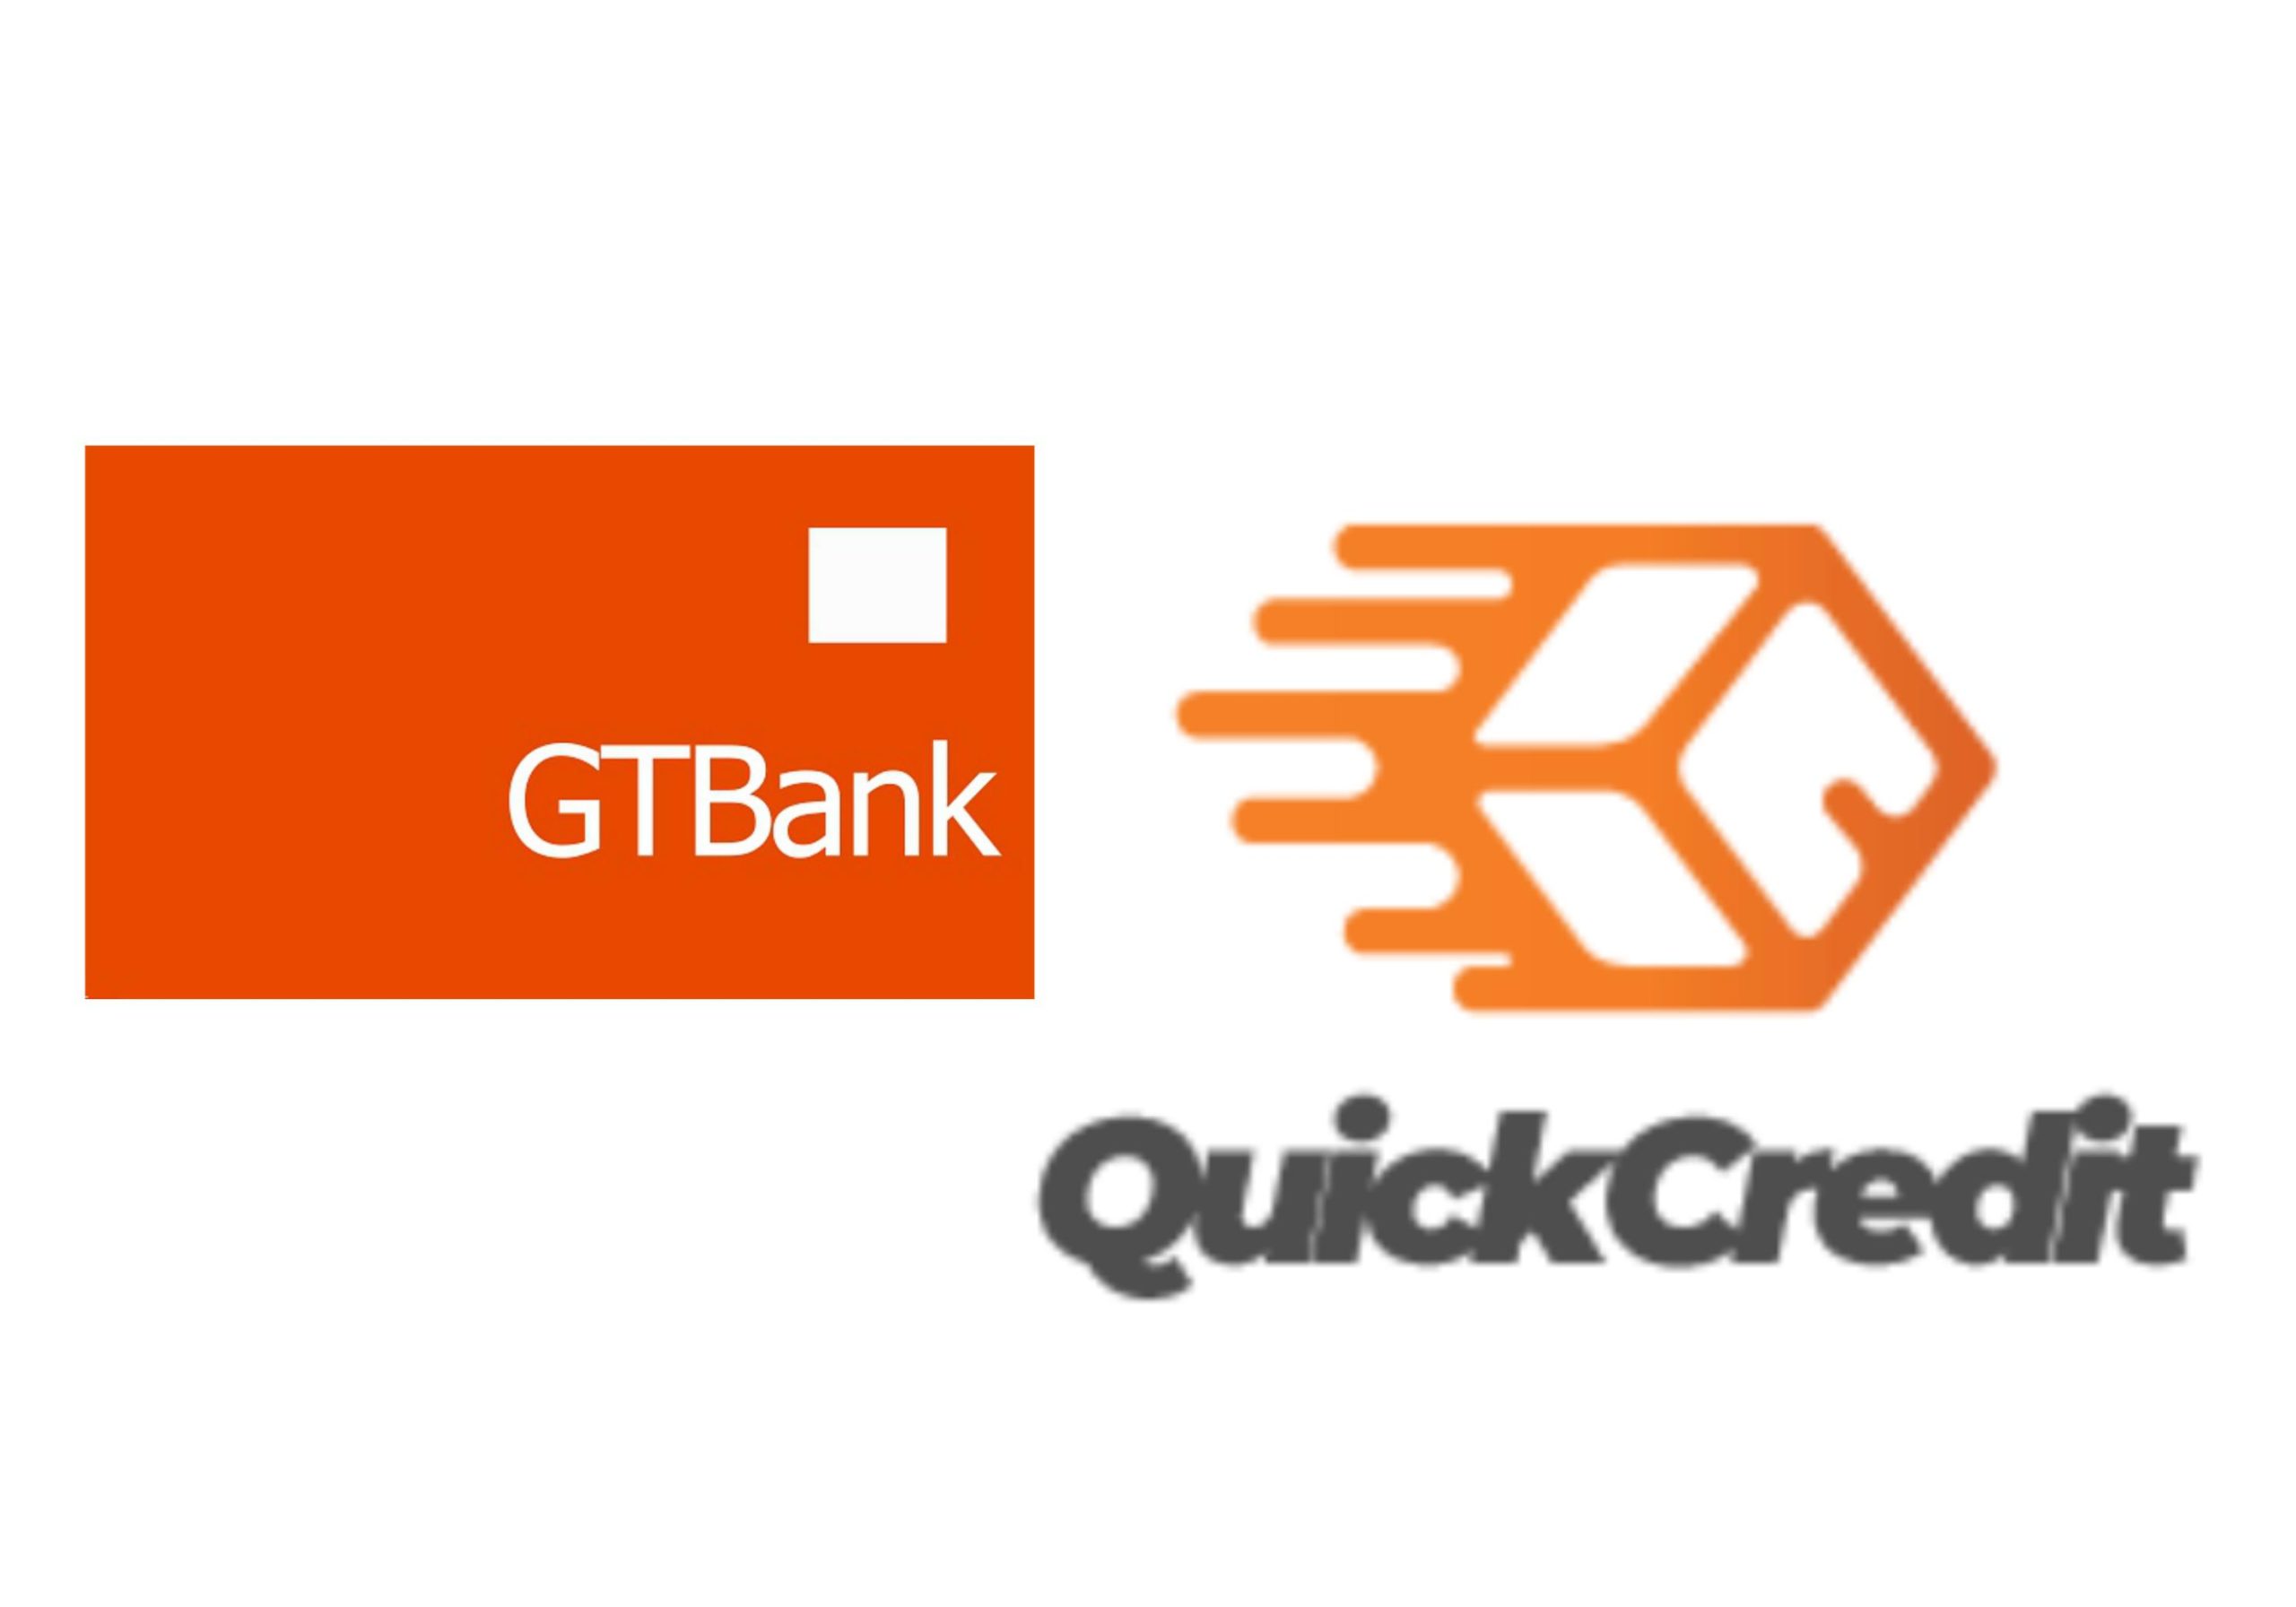 GTBank Quick Credit Loan